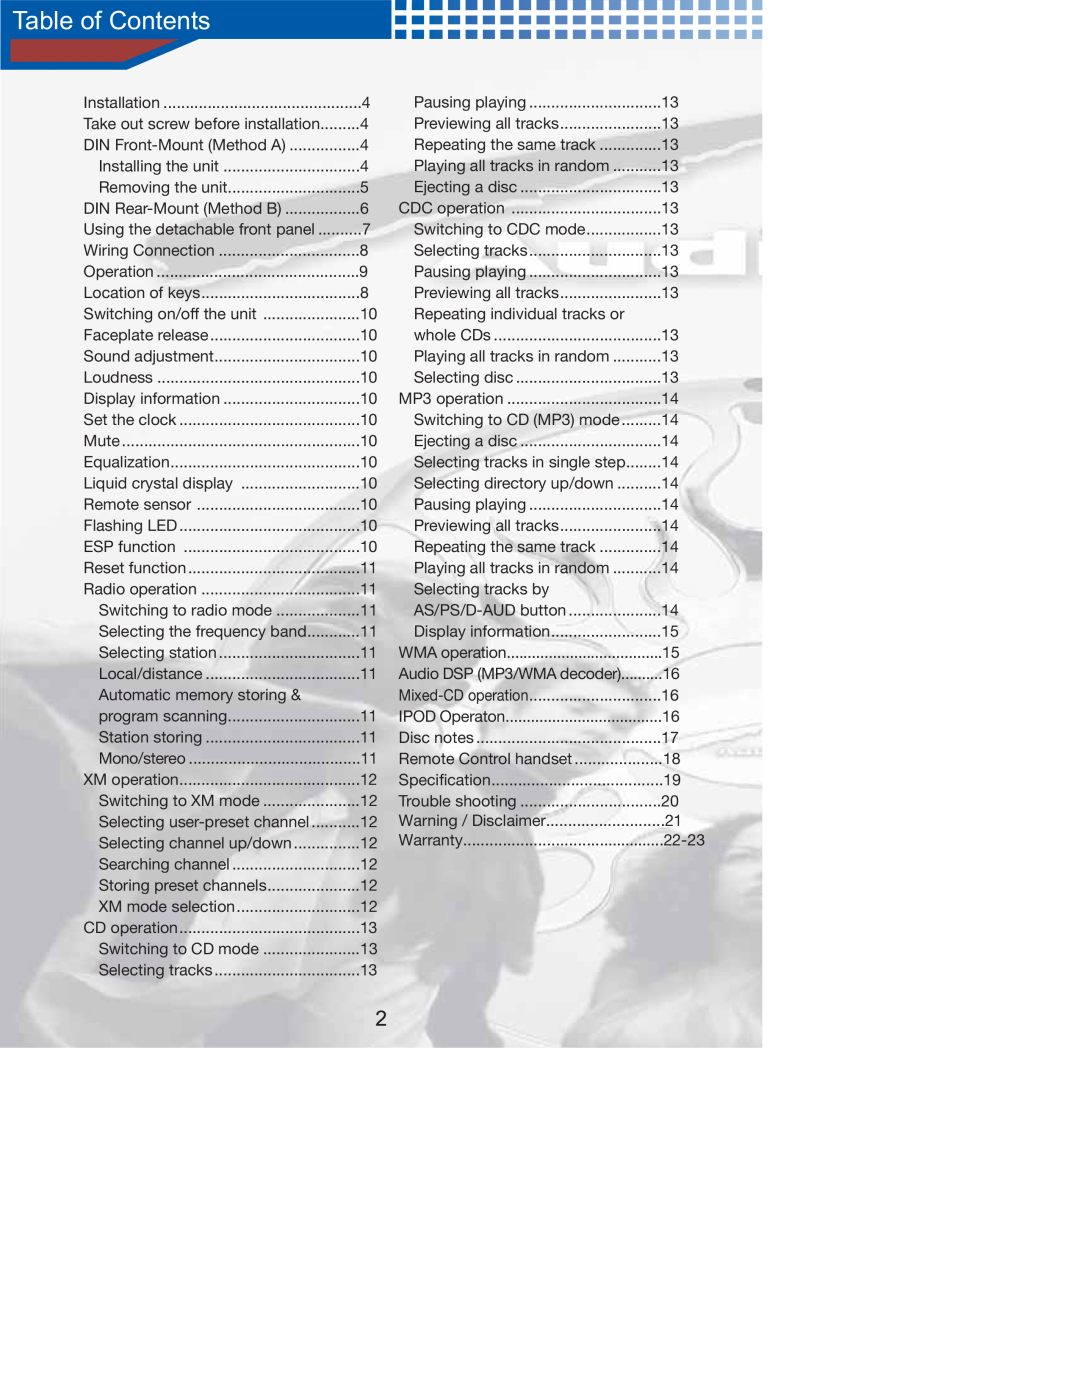 AudioBahn A1200N Table of Contents, 4FMFDUJOHUSBDLTCZ, VupnbujdNfnpszTupsjoh, VEJP%41 .18.EFDPEFS  